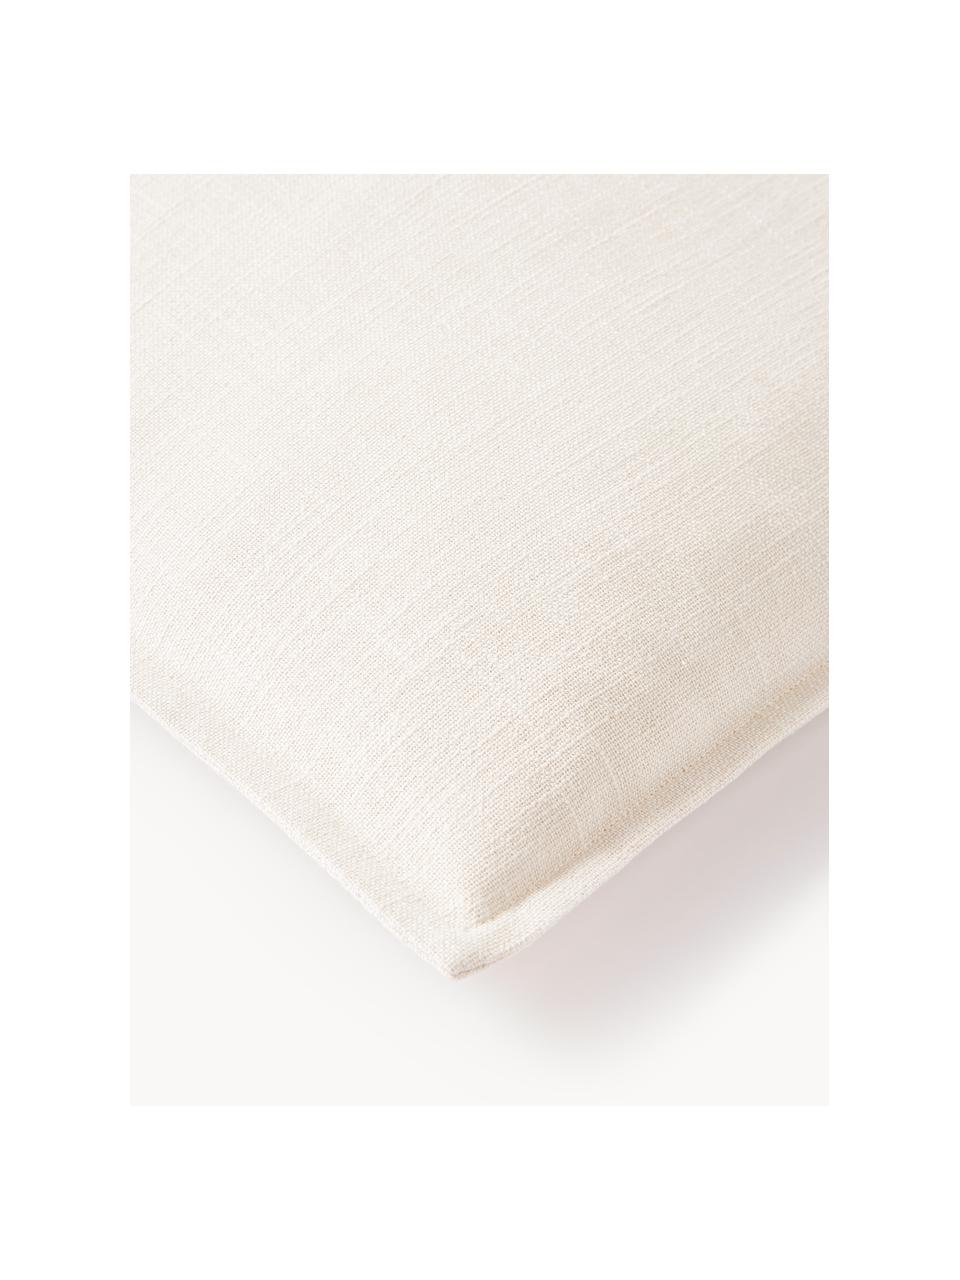 Funda de cojín de algodón Vicky, 100% algodón, Blanco crema, An 50 x L 50 cm